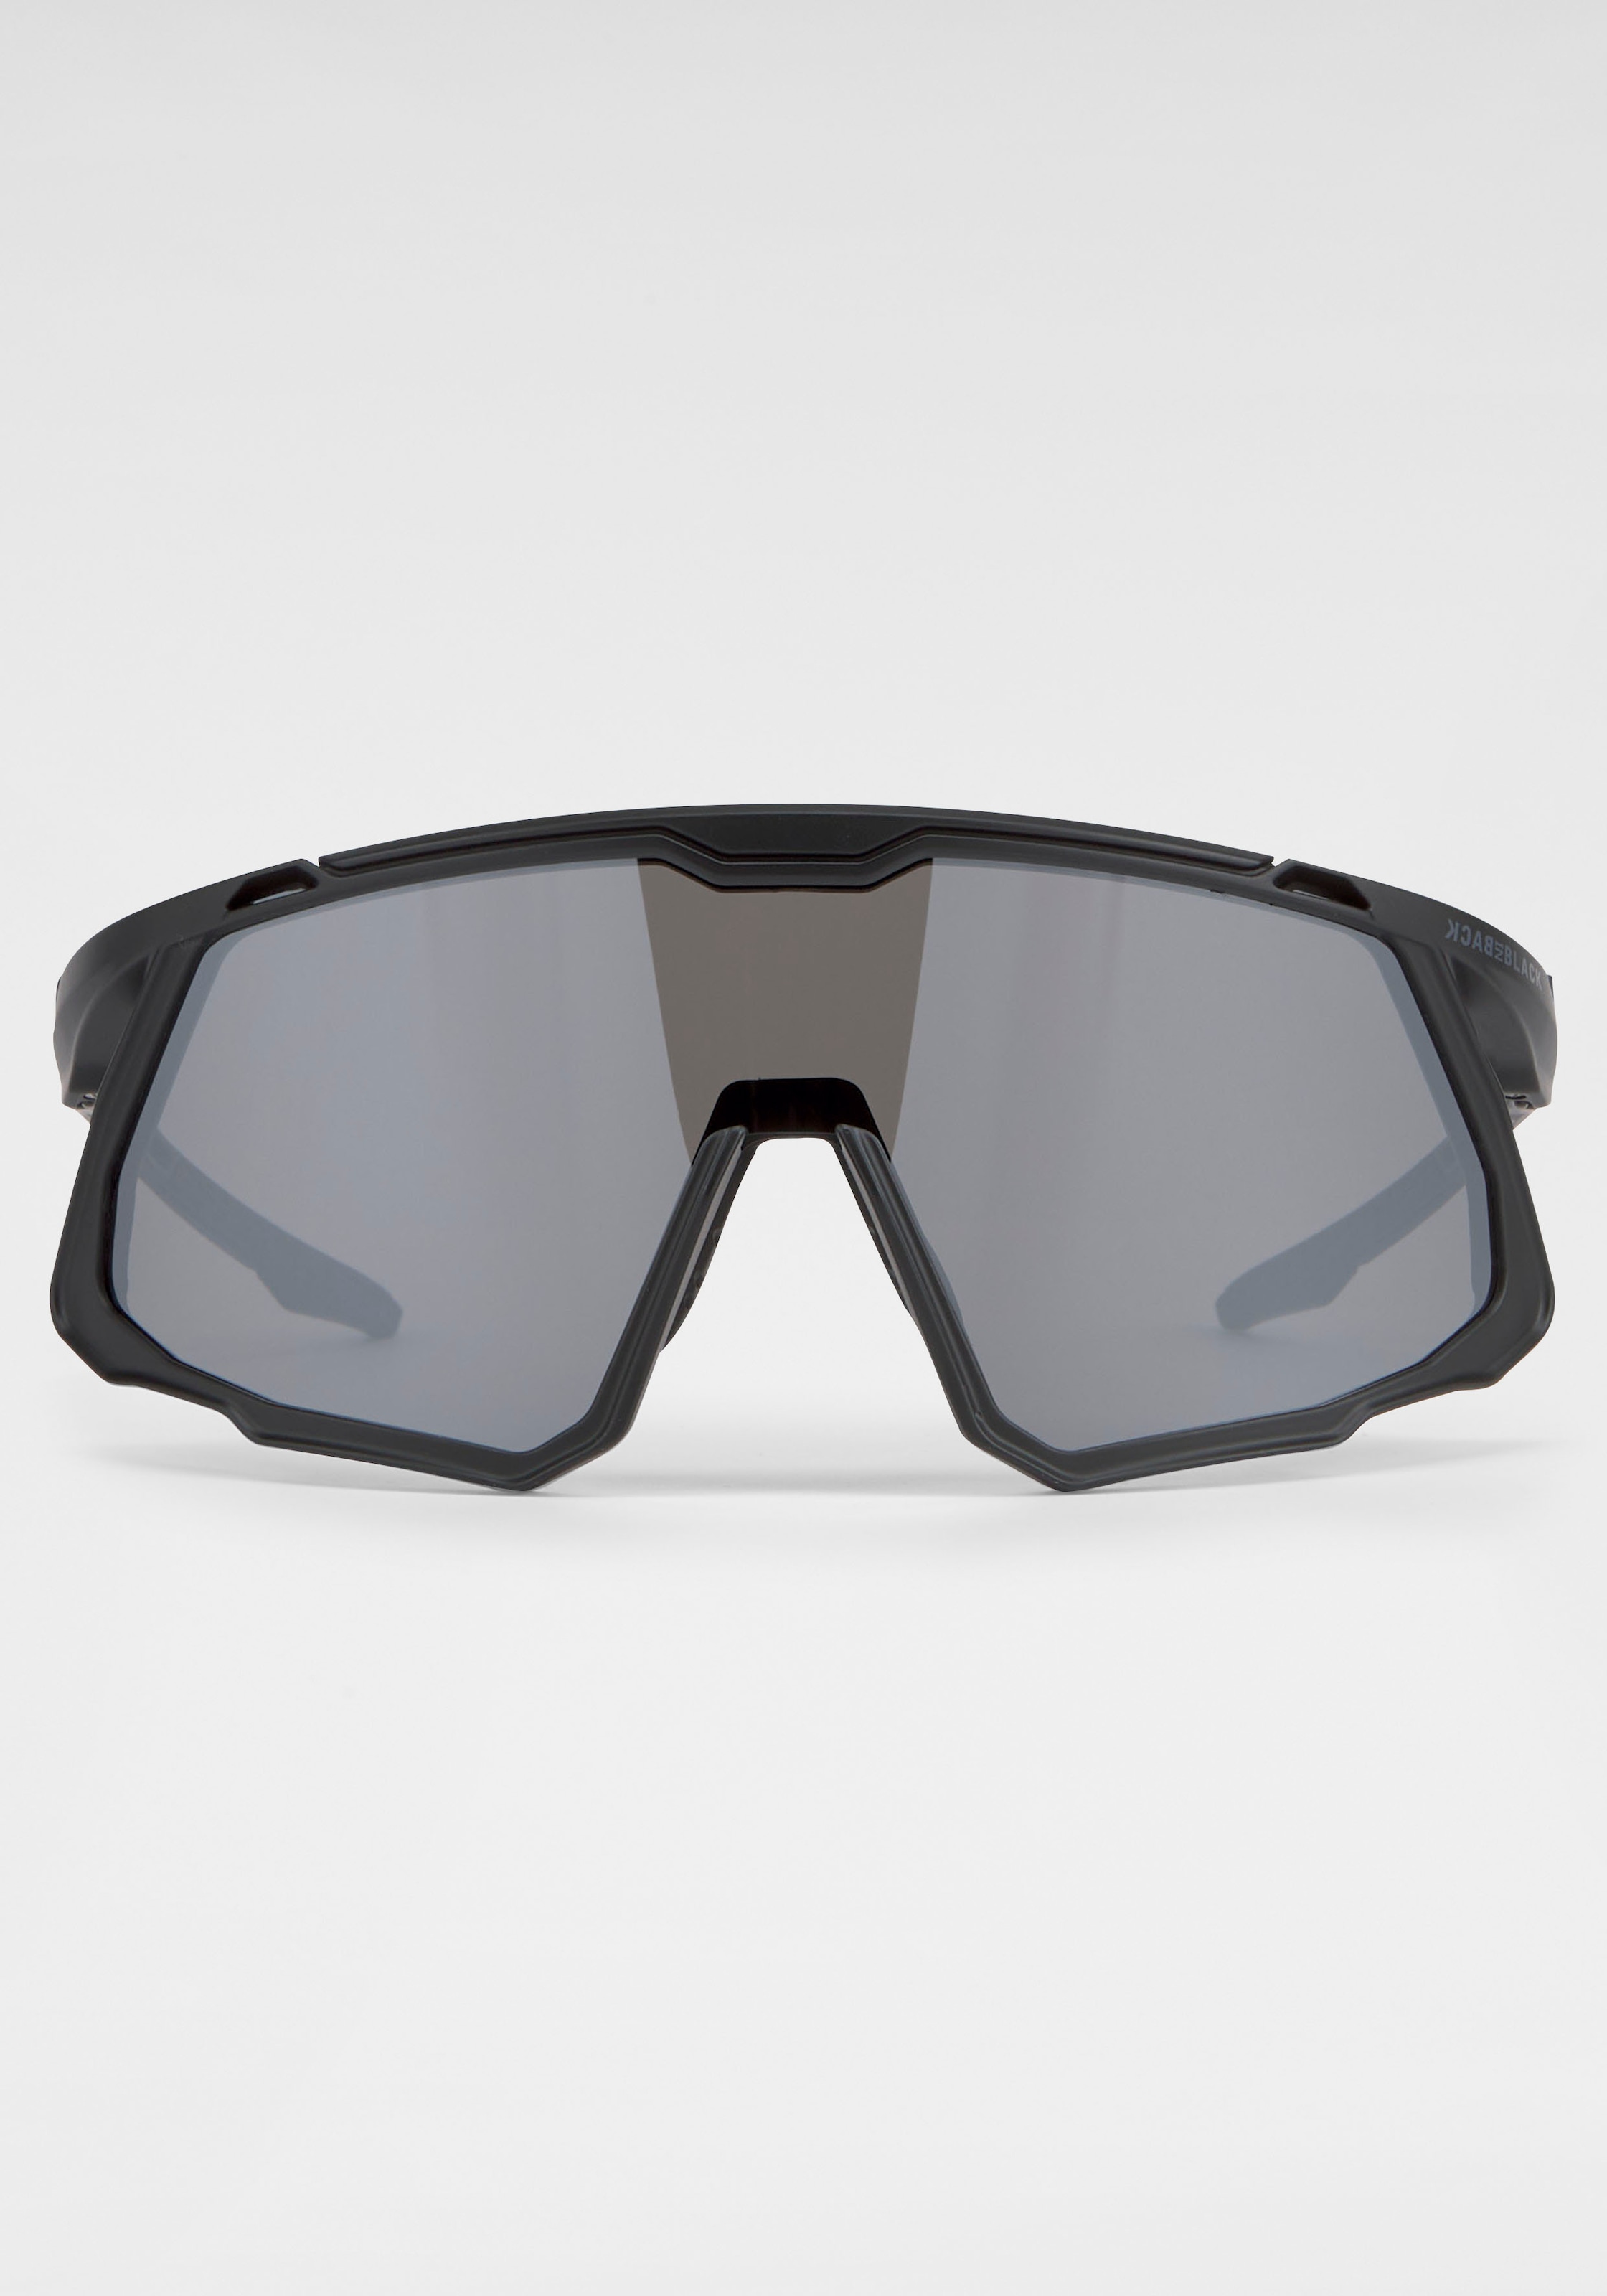 online IN Sonnenbrille, Eyewear gebogene BLACK BACK Form